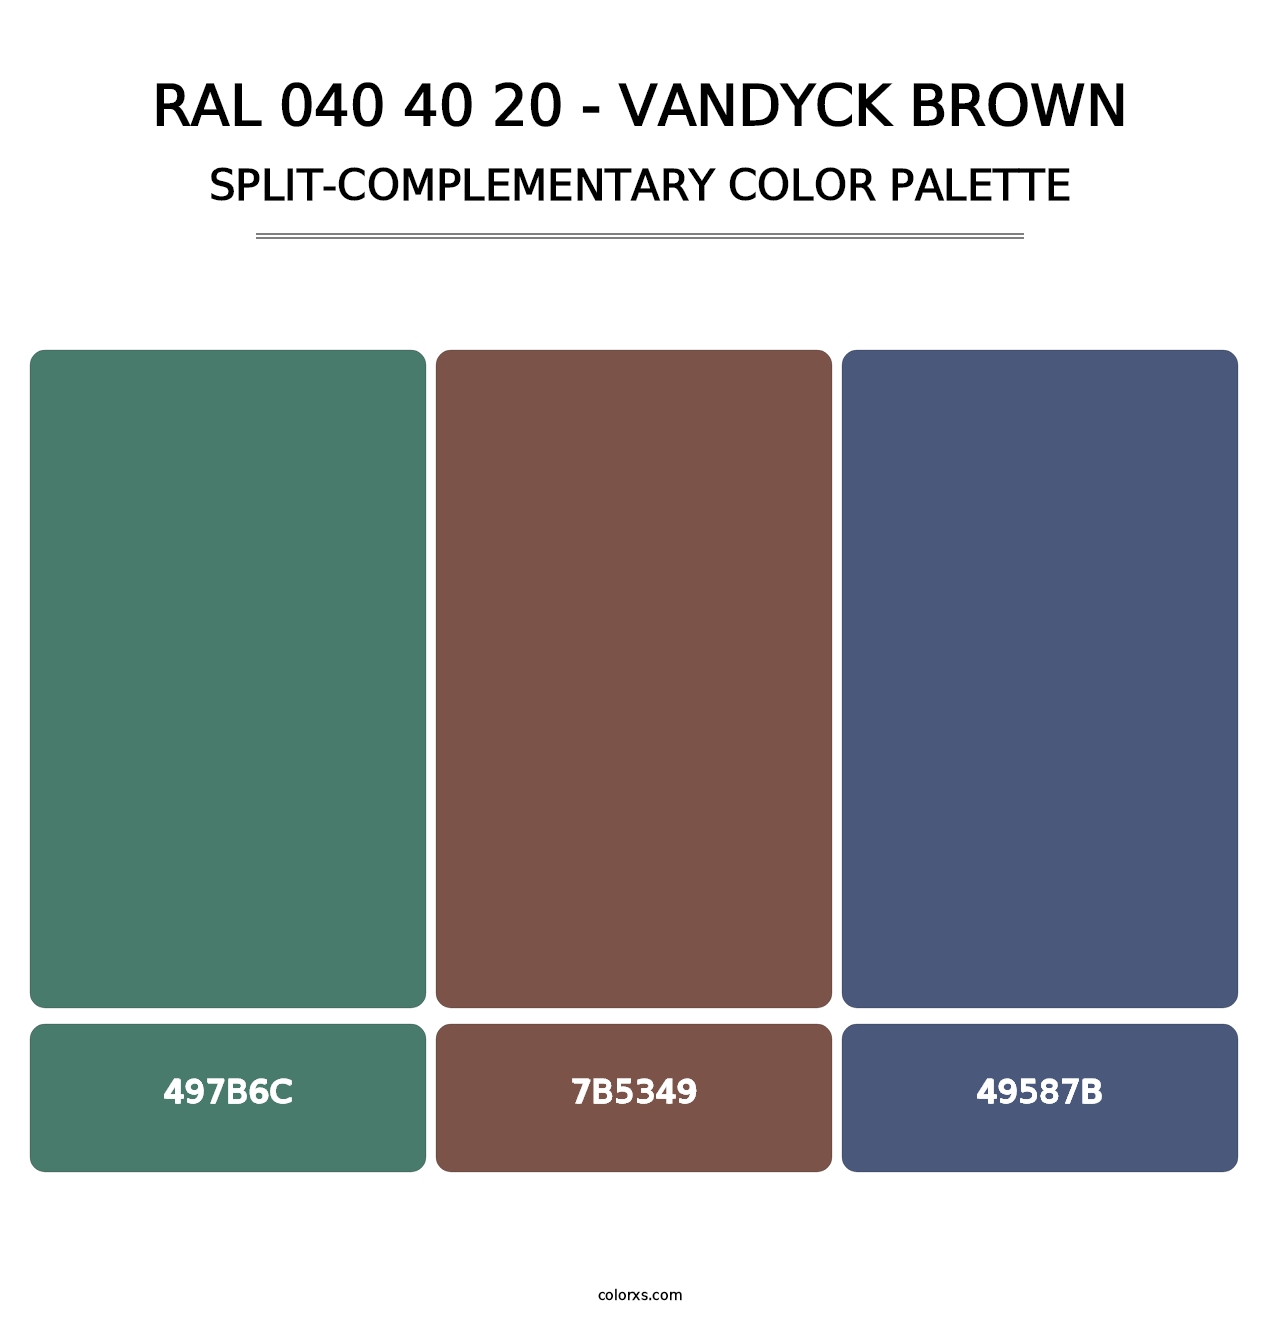 RAL 040 40 20 - Vandyck Brown - Split-Complementary Color Palette